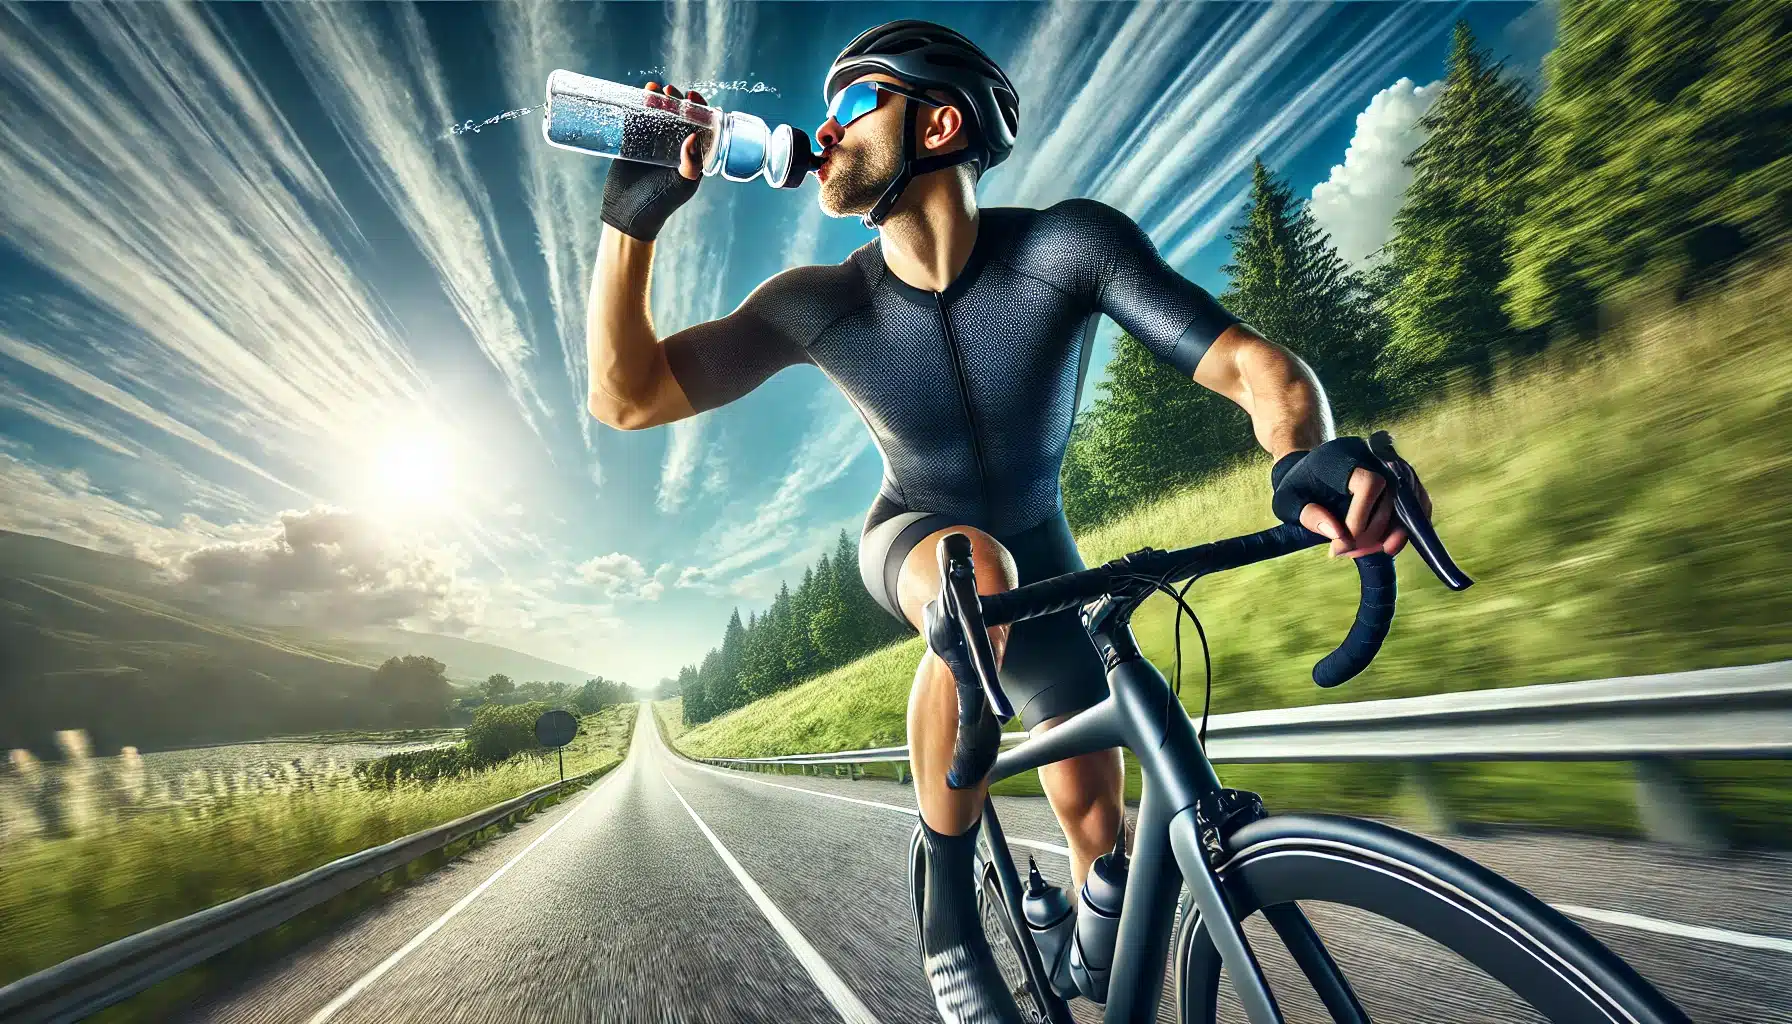 ciclista bebiendo agua